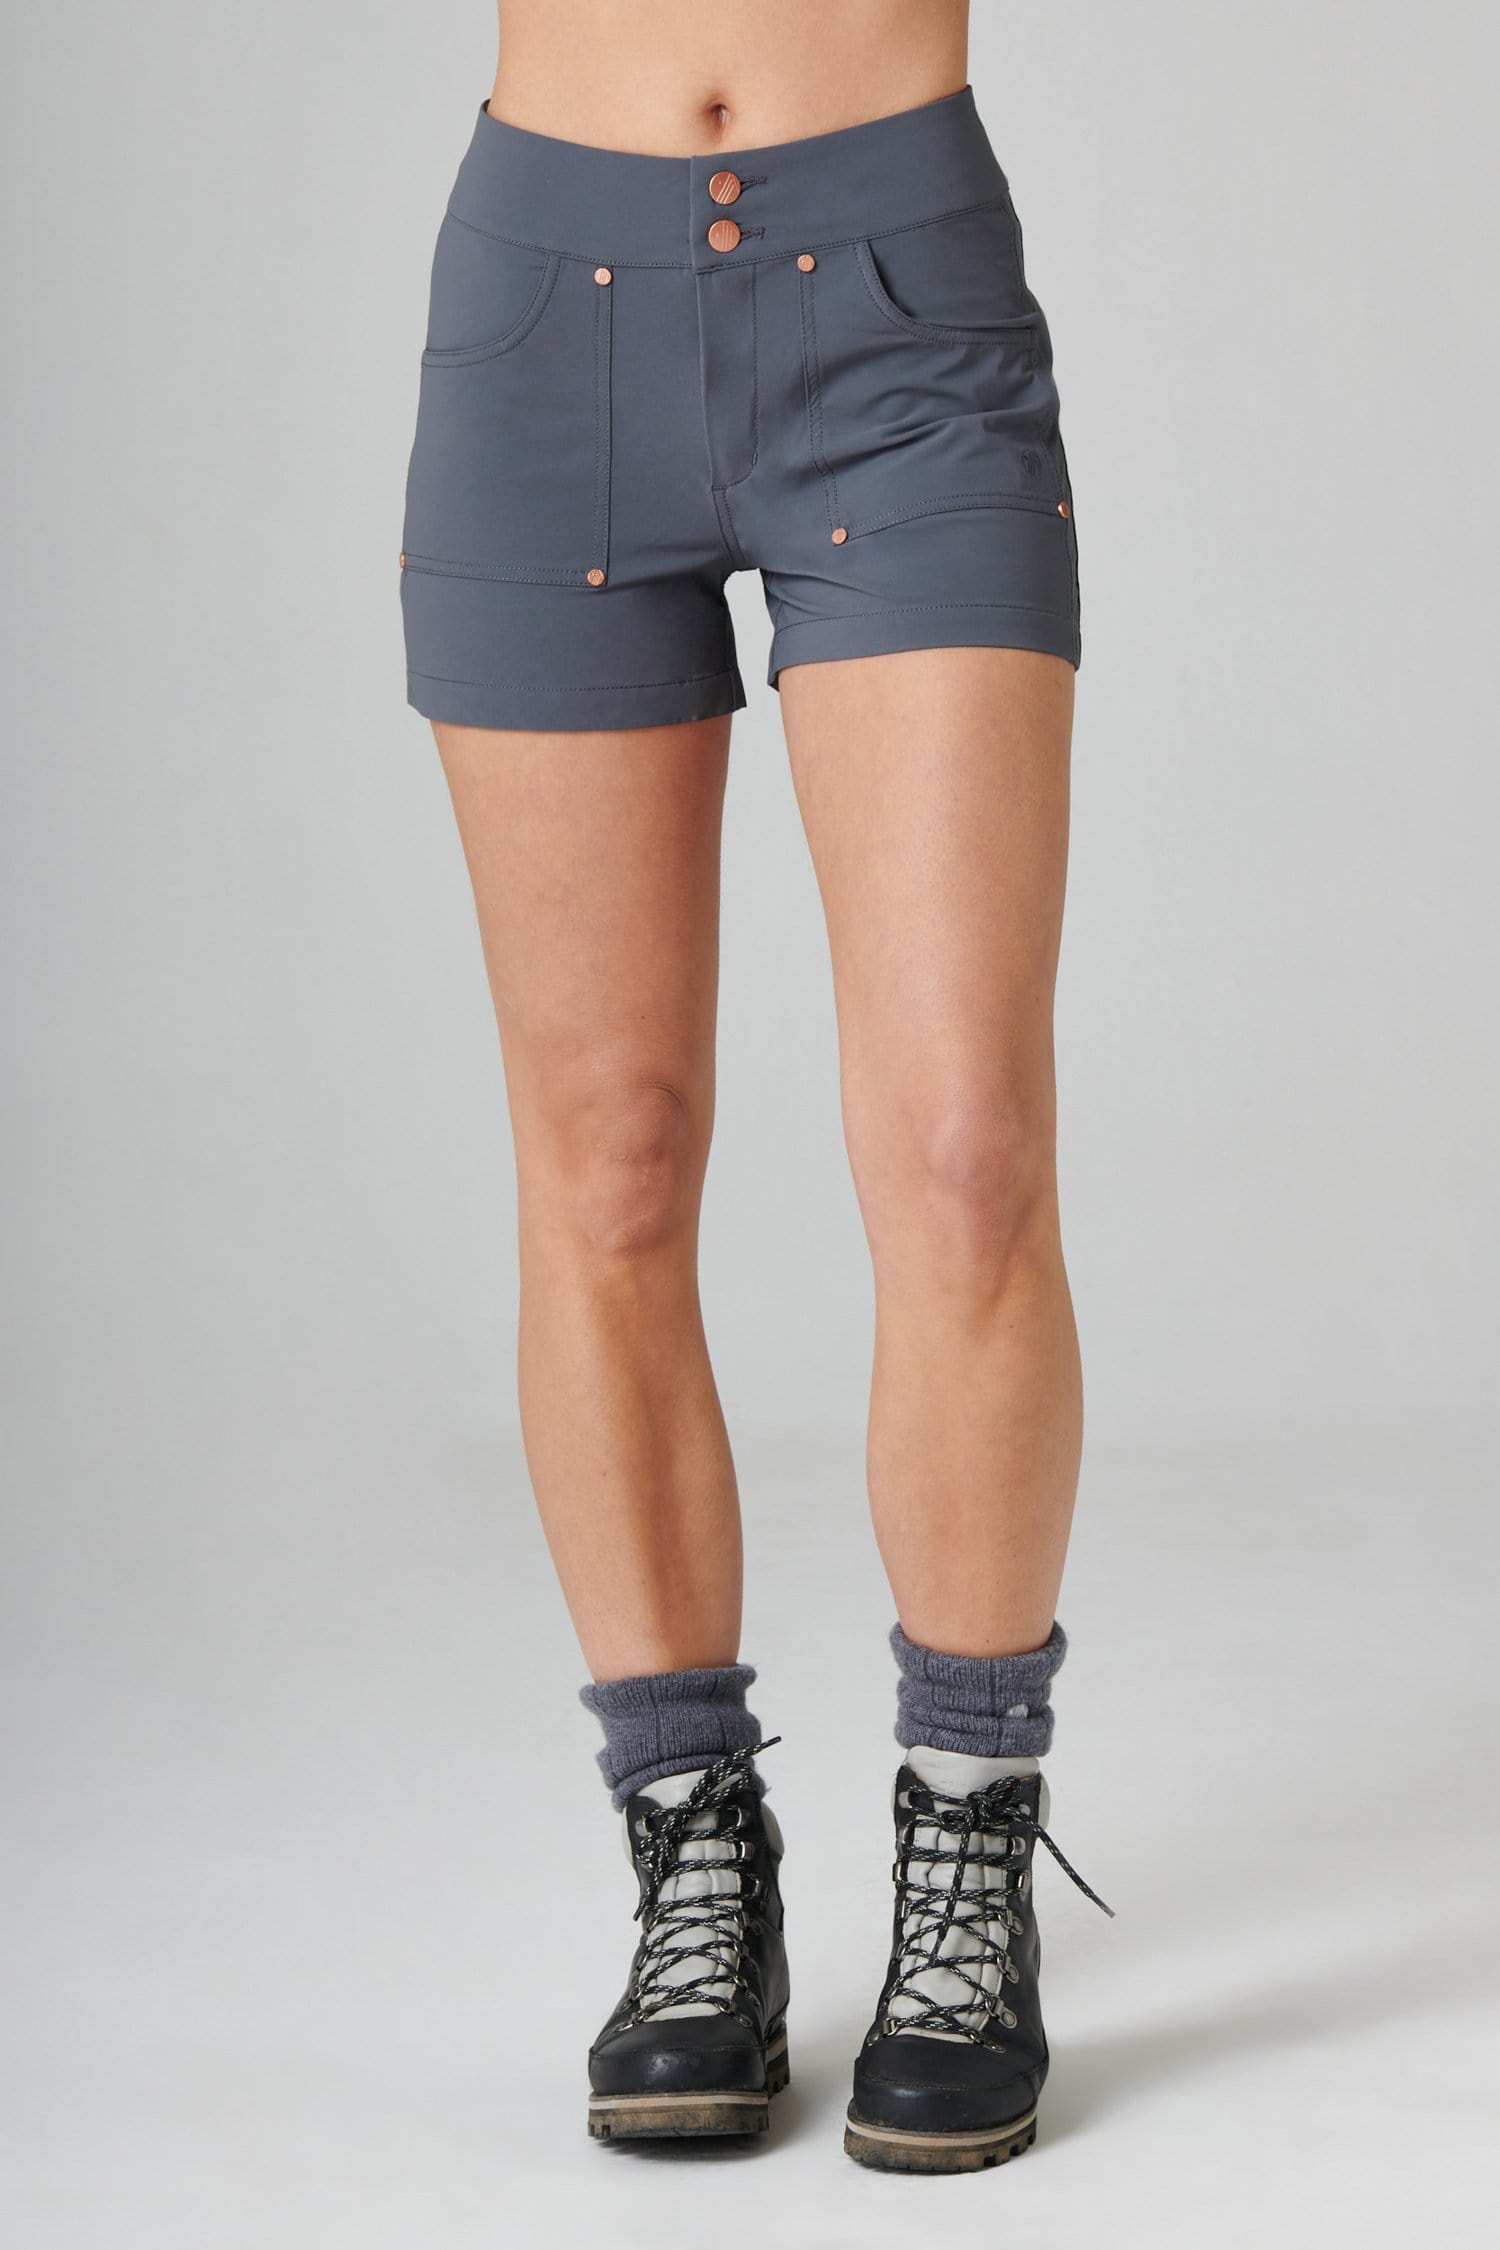 Trek Shorts - Storm Grey - 24 / Uk6 - Womens - Acai Outdoorwear